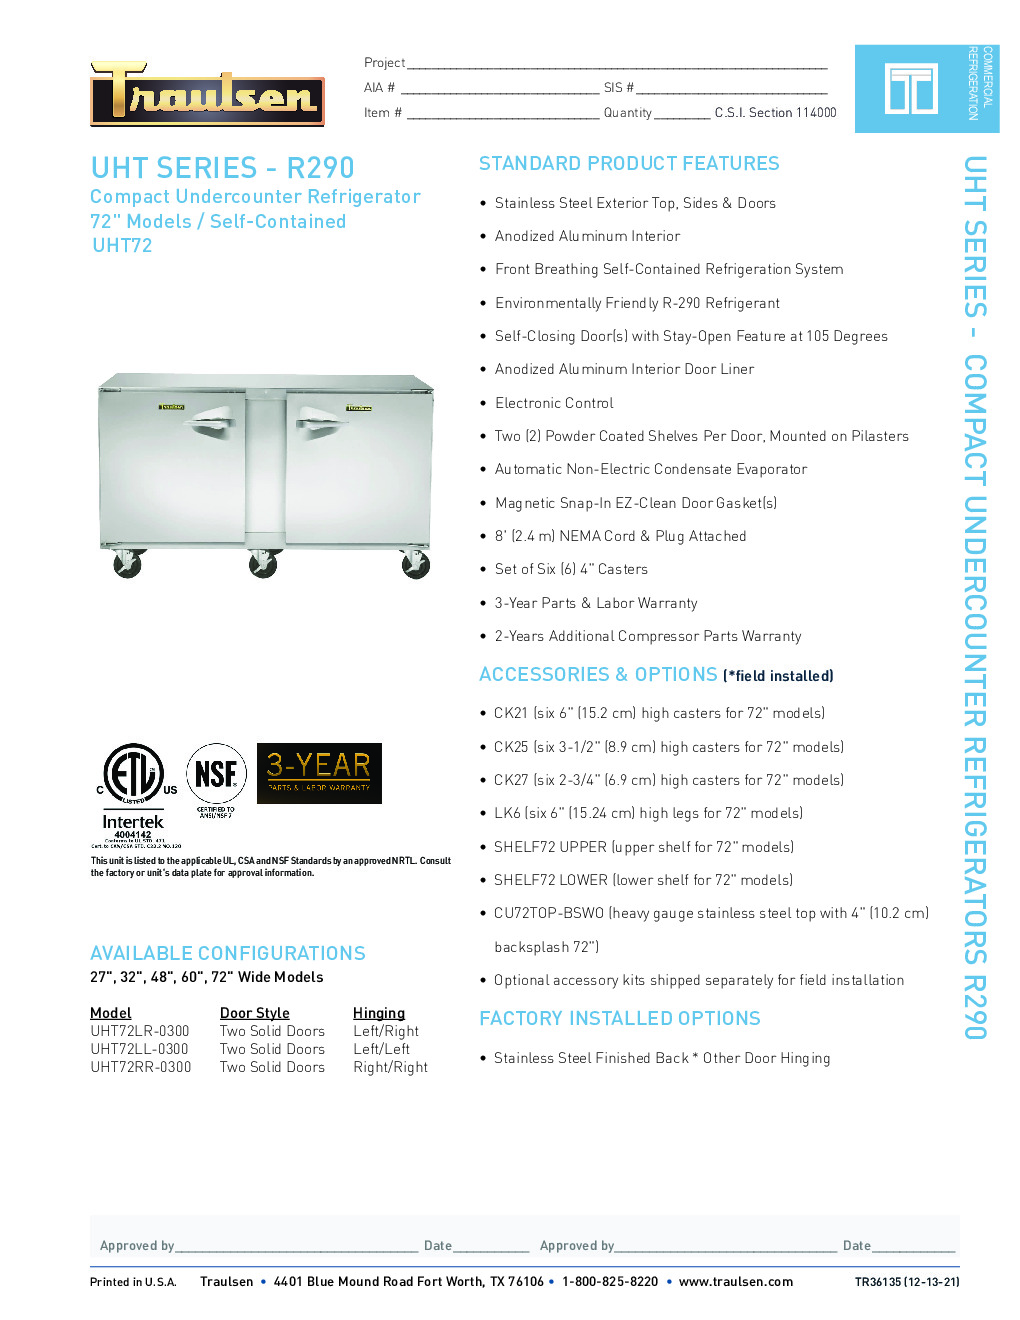 Traulsen UHT72LR-0300 Reach-In Undercounter Refrigerator